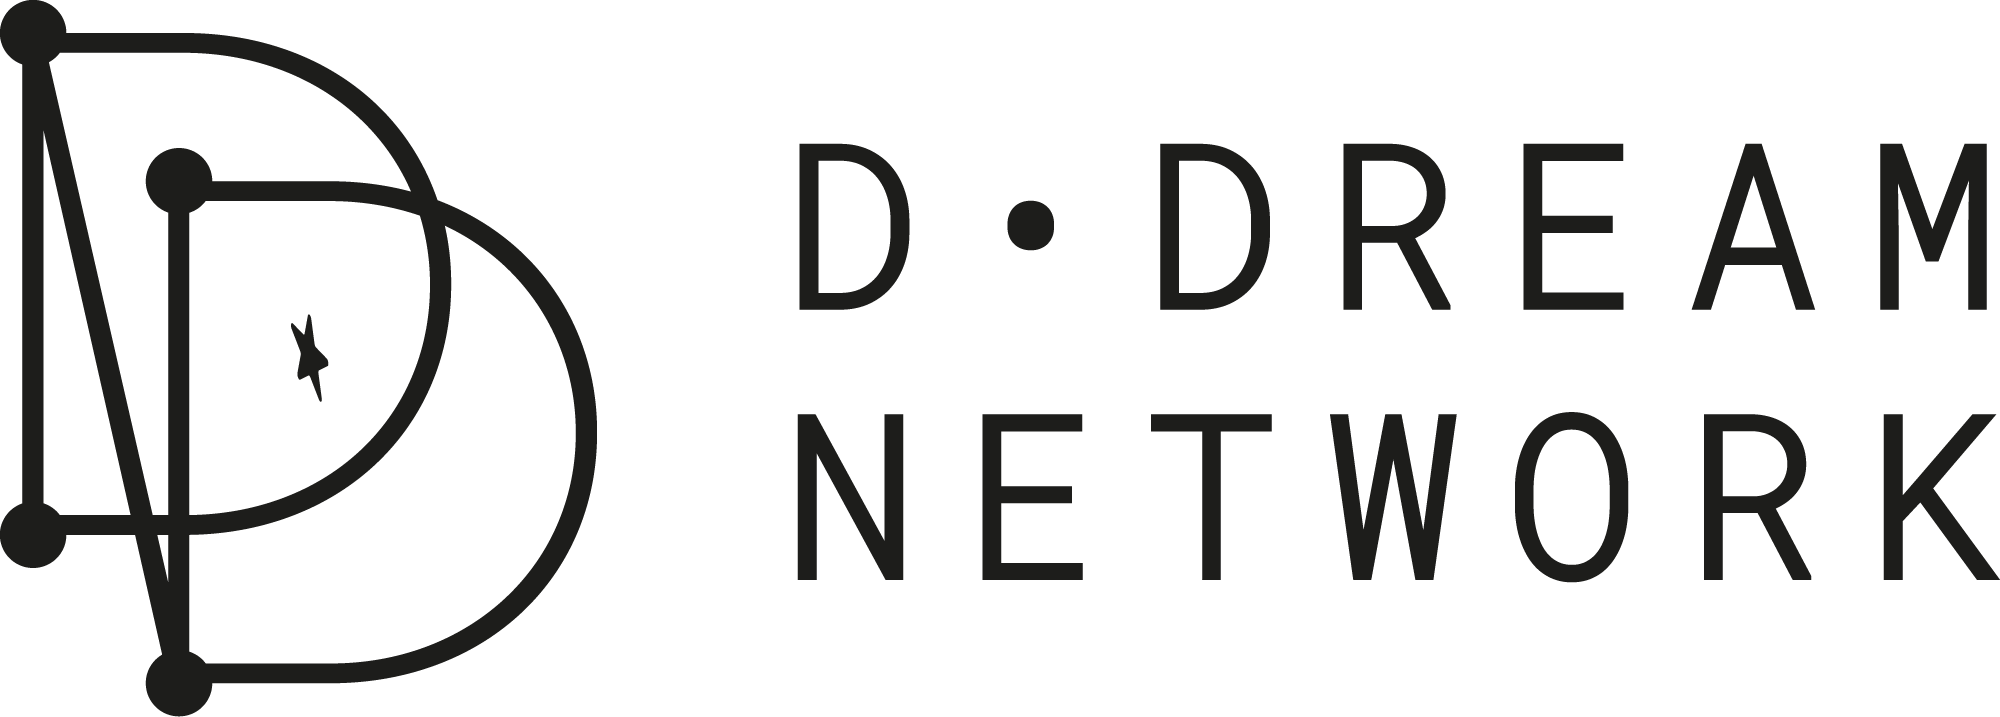 DDREAM NETWORK logo